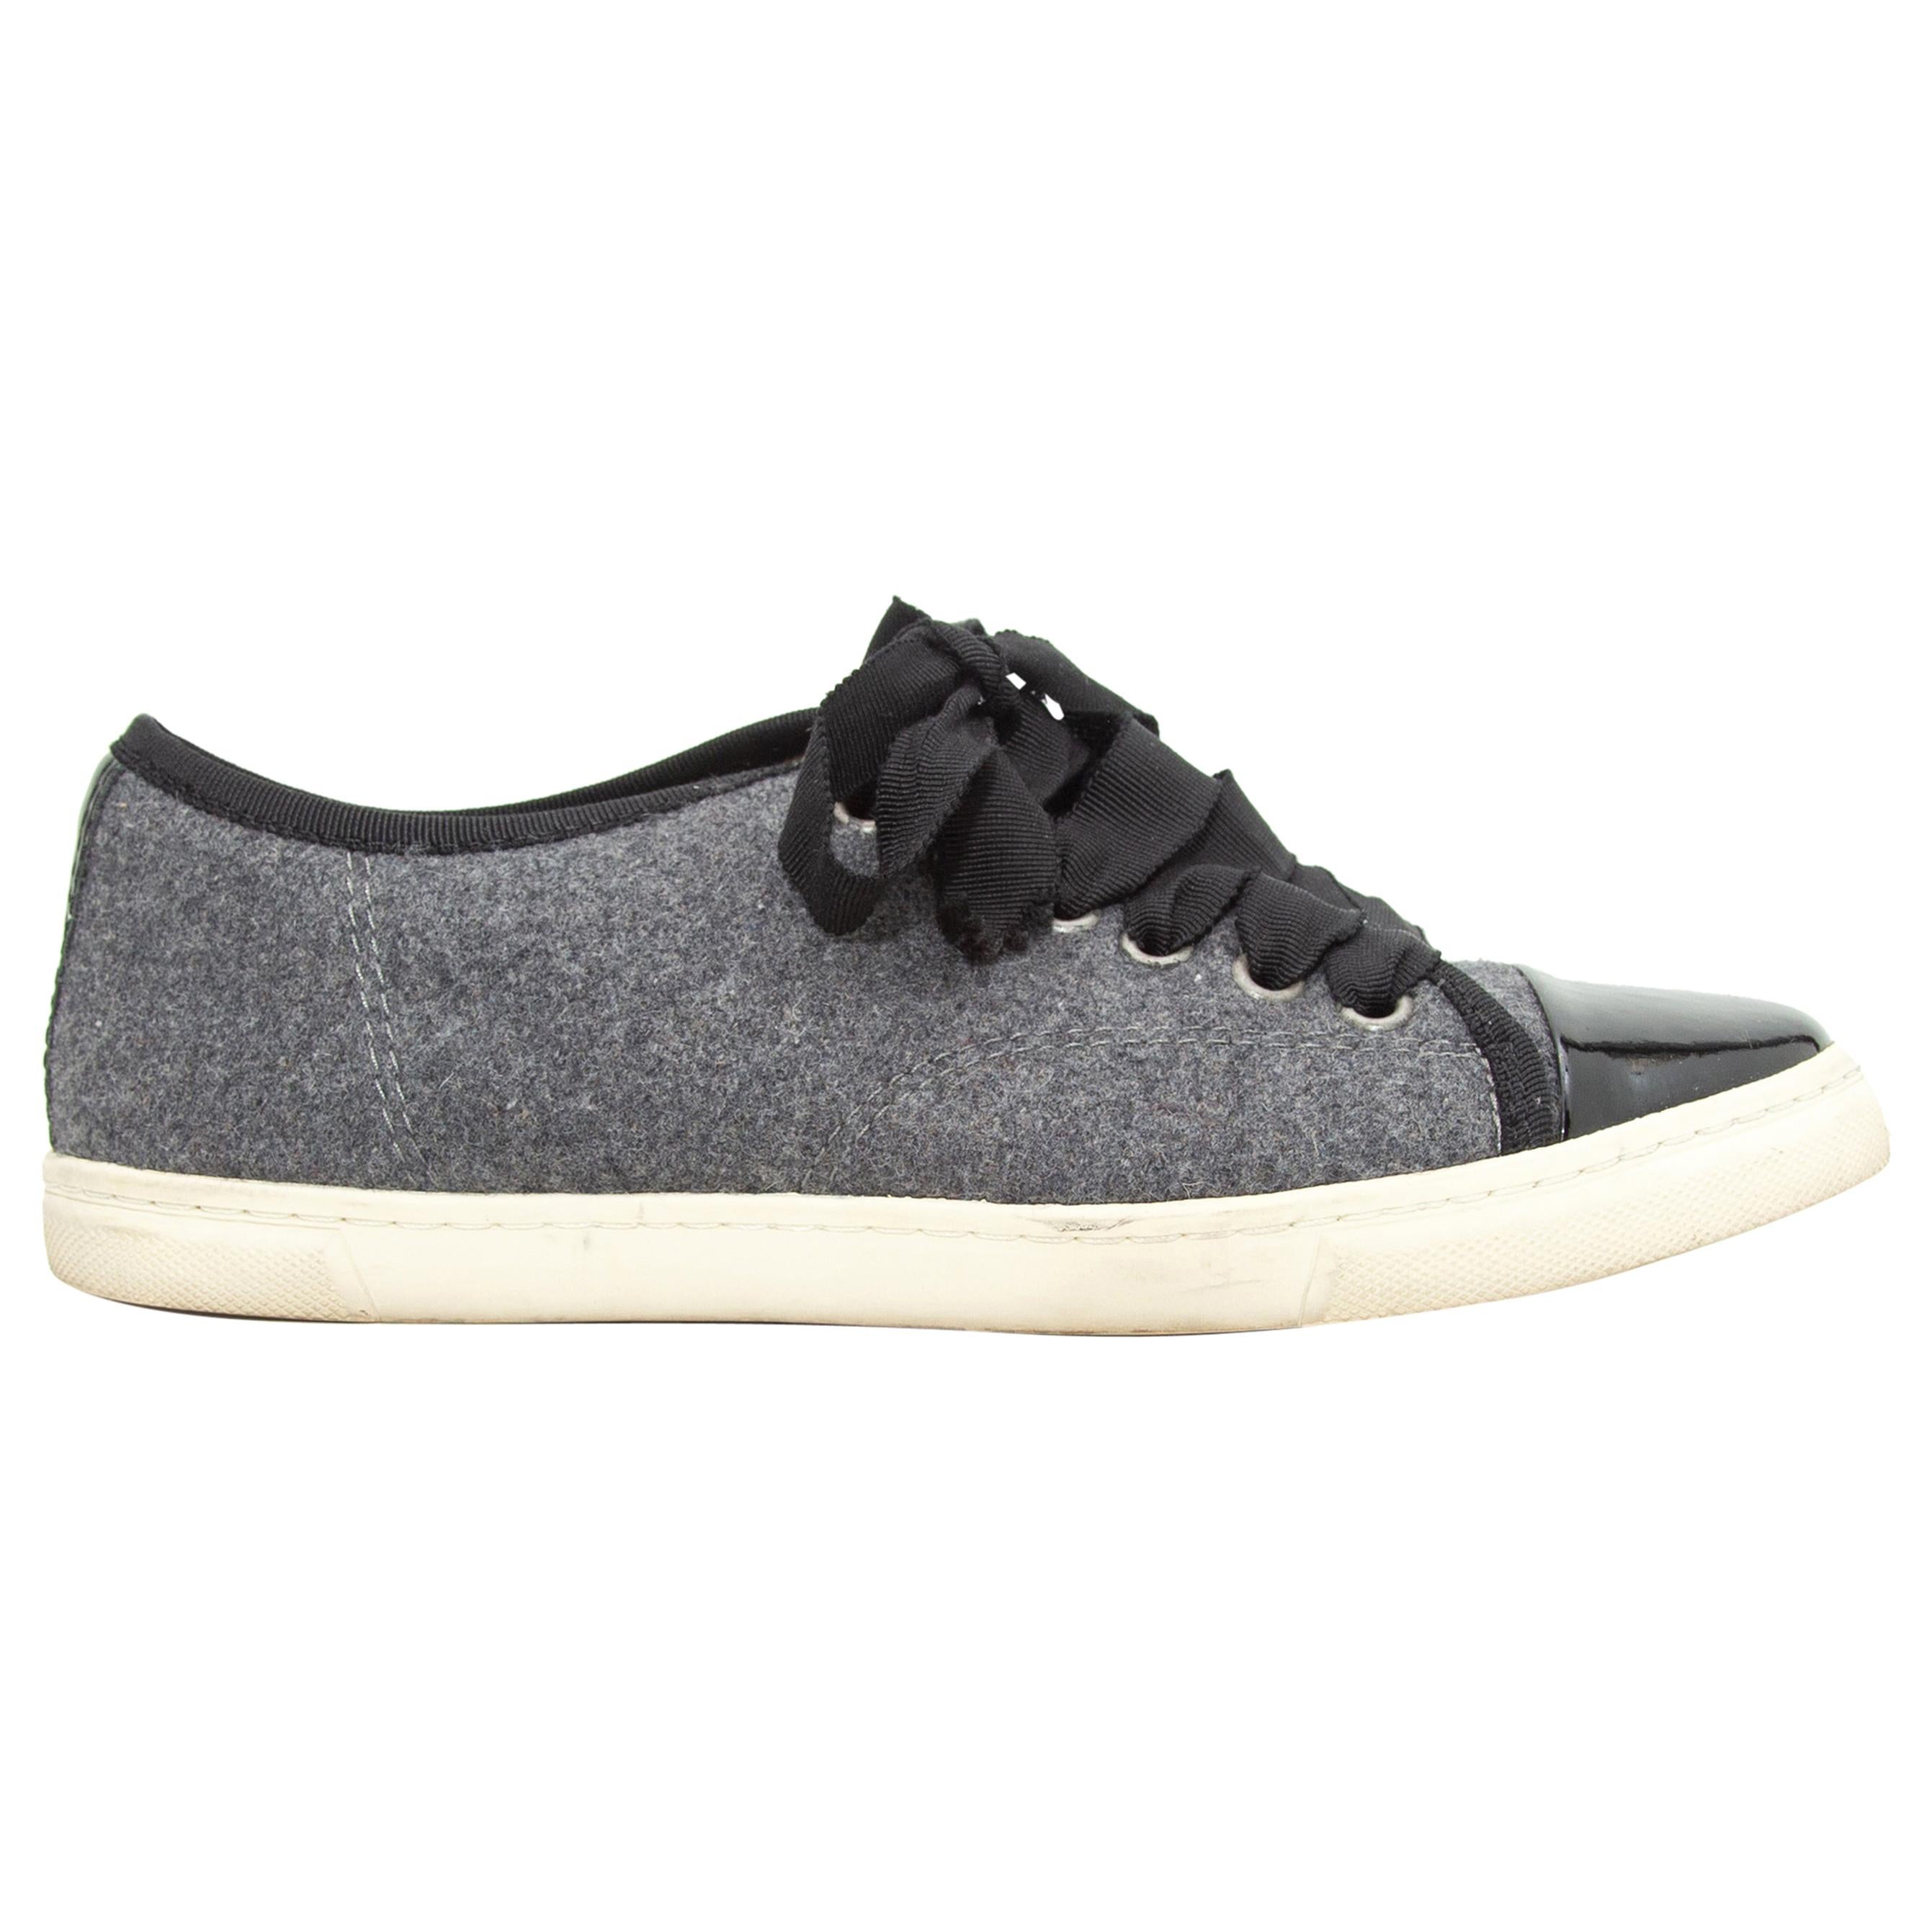 Lanvin Grey & Black Wool & Leather Low-Top Sneakers